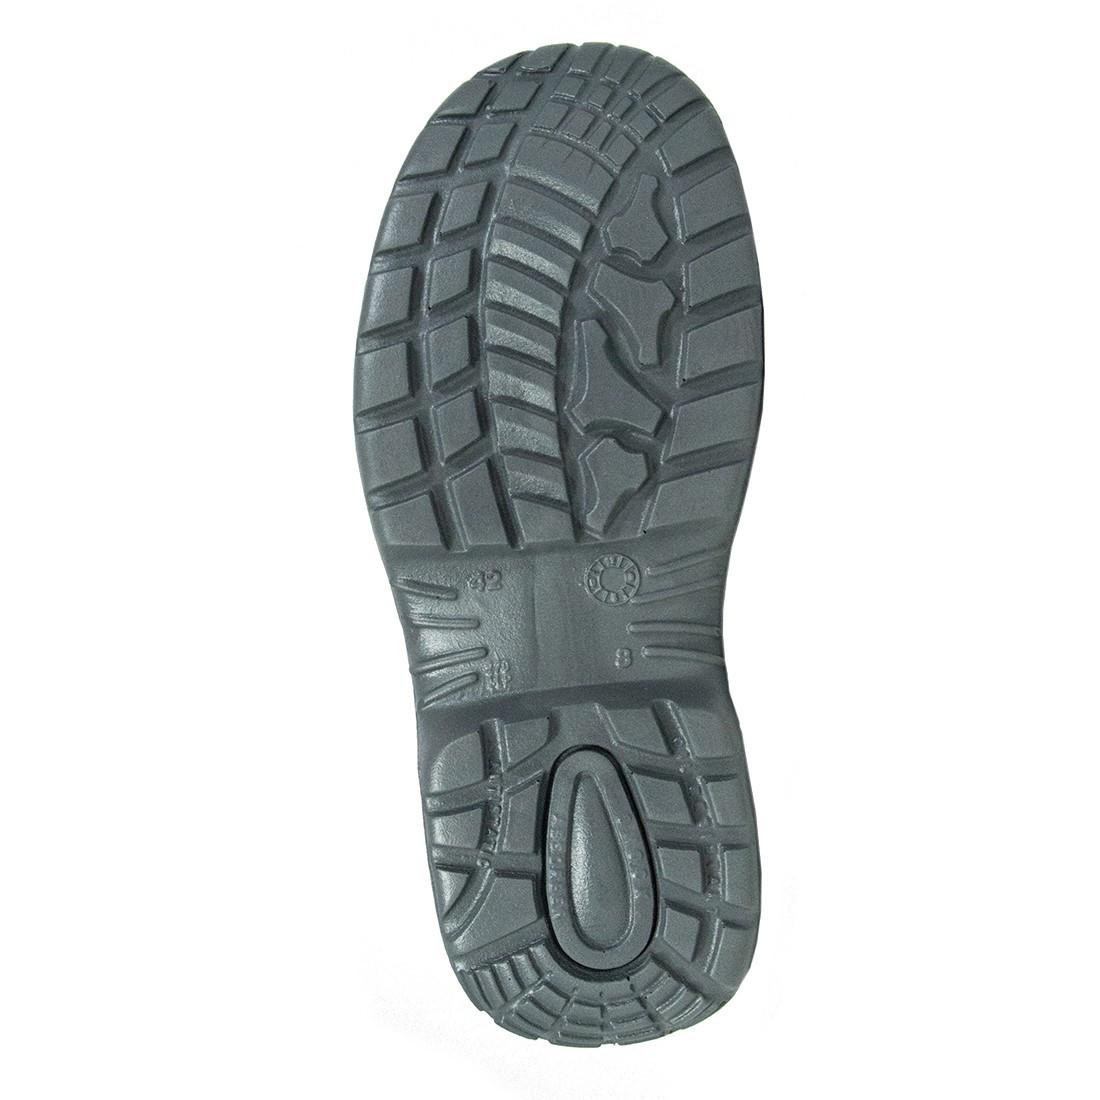 Pantofi Tribeca S1 SRC - Incaltaminte de protectie